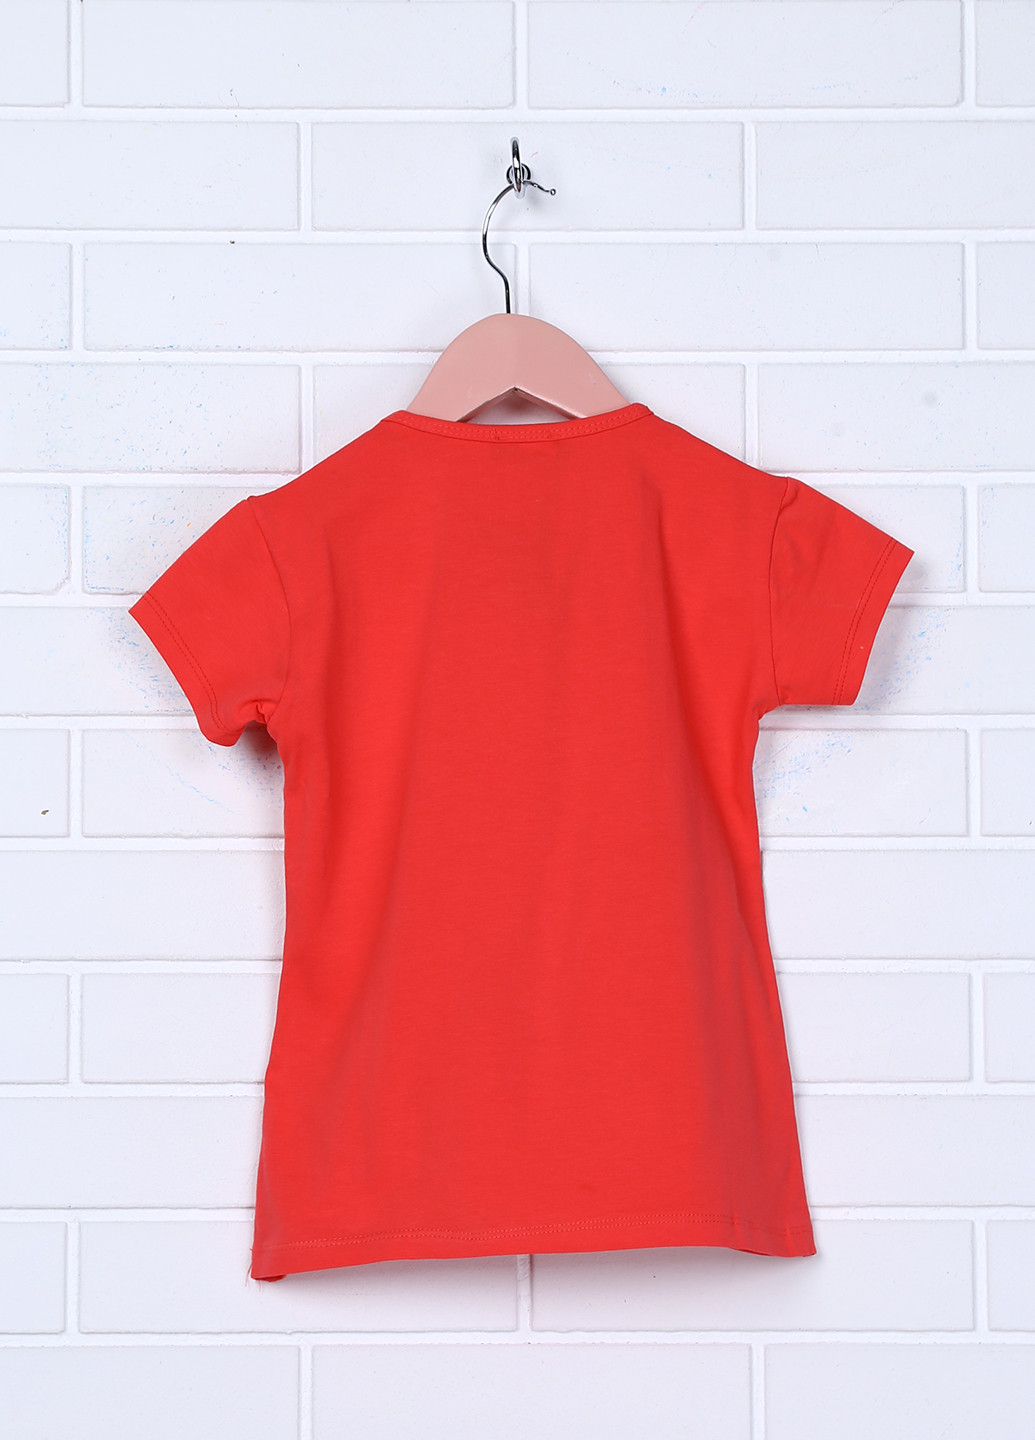 Красная летняя футболка с коротким рукавом Dofa Kids